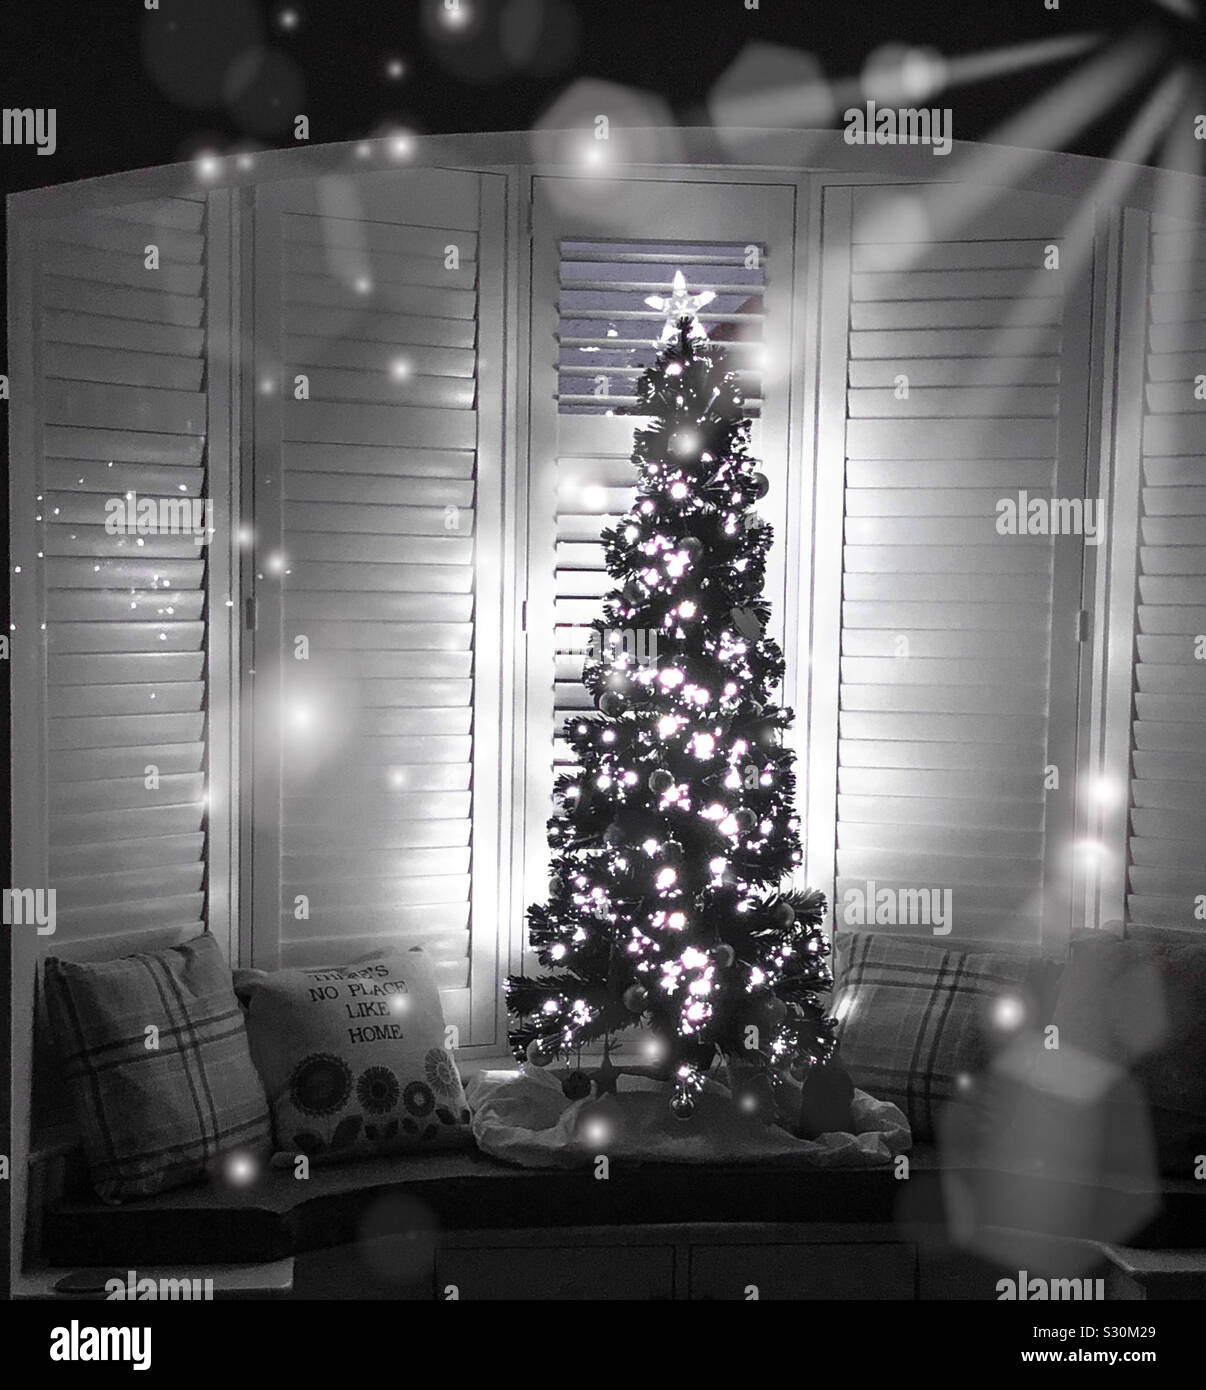 Arbre de Noël avec des lumières scintillantes Banque D'Images